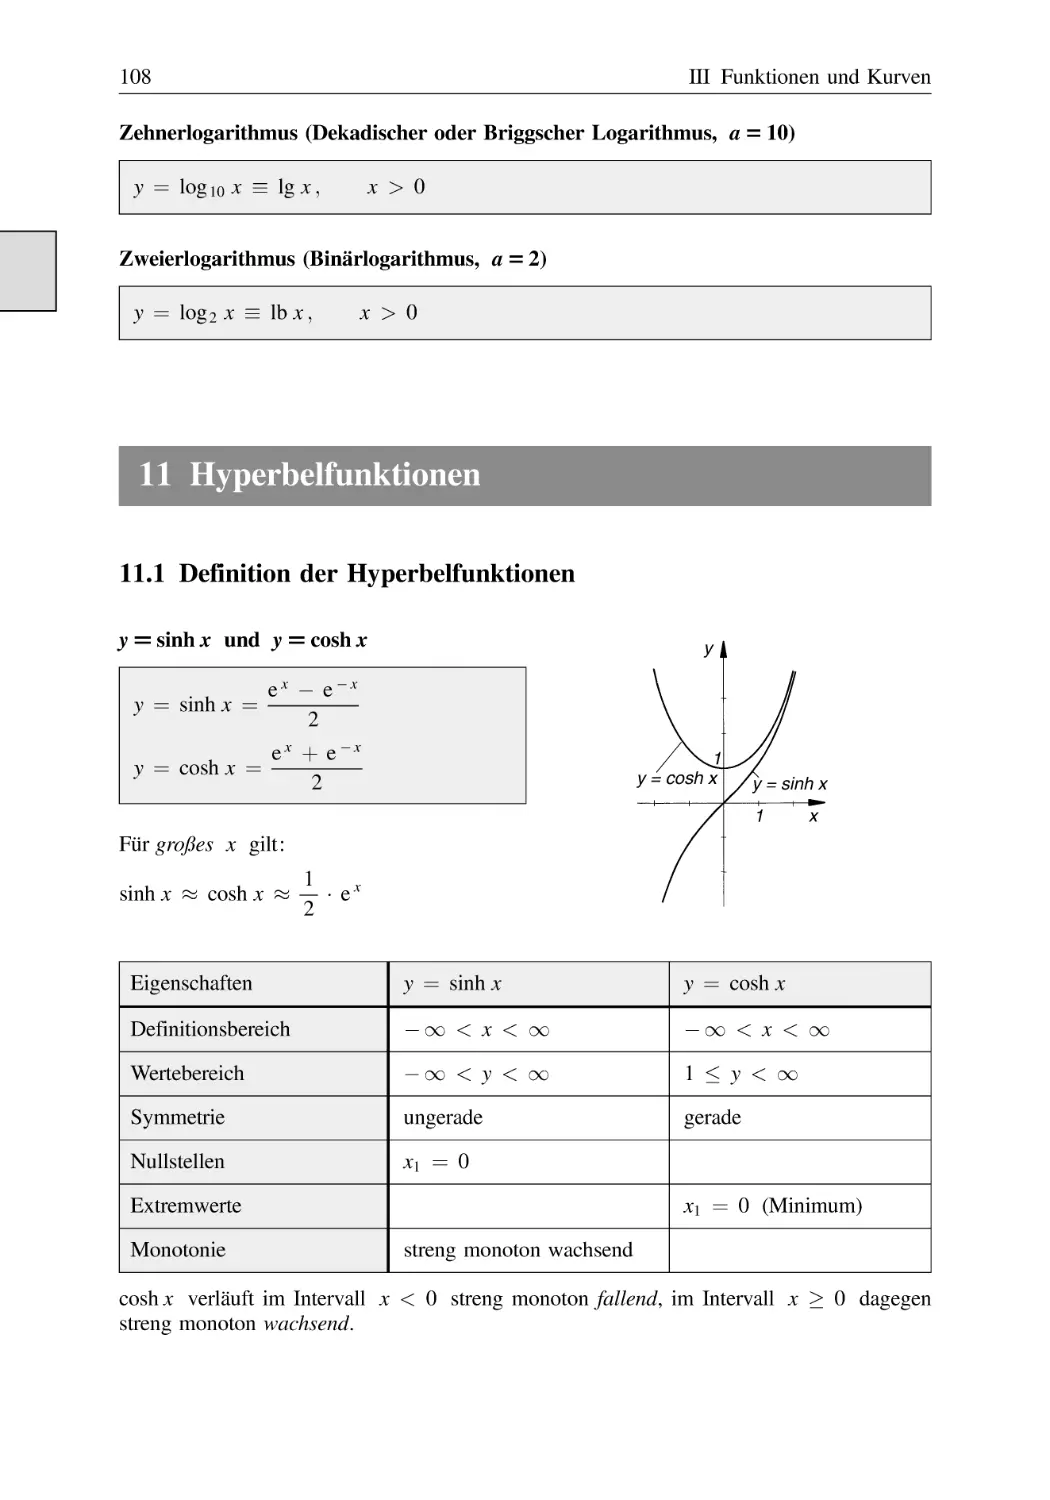 11 Hyperbelfunktionen
11.1 Definition der Hyperbelfunktionen